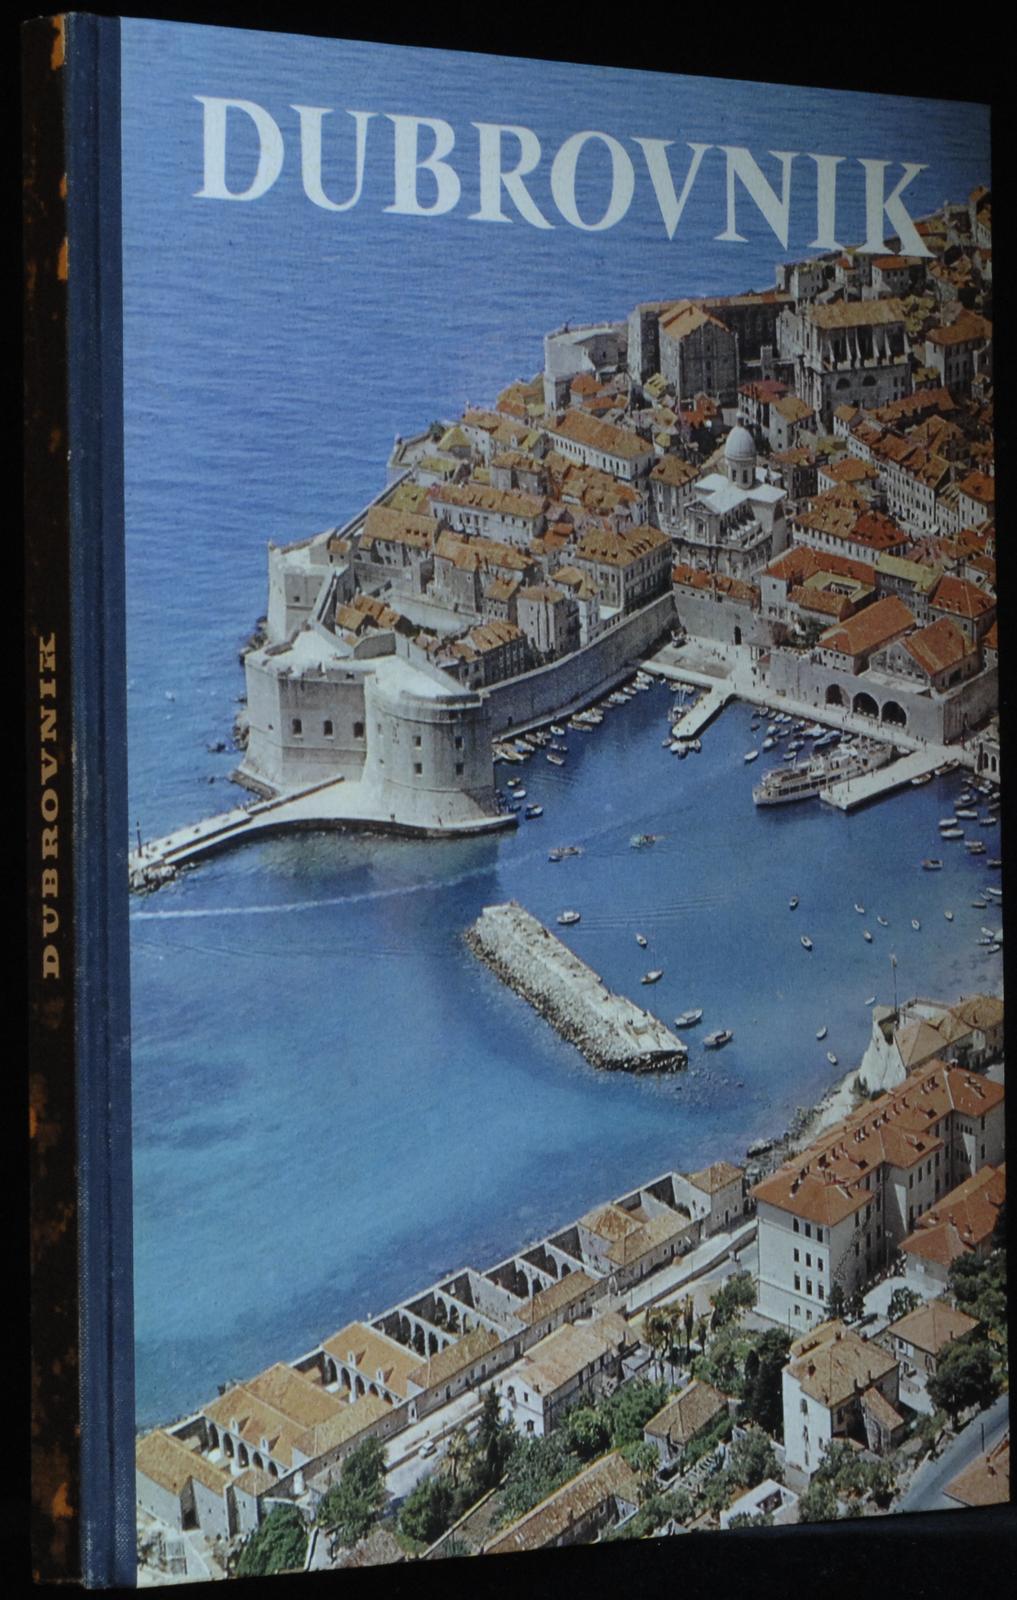 mbb006960b_-_Fiskovic_Cvito_-_Dubrovnik_-_Contains_Illustrations.jpg